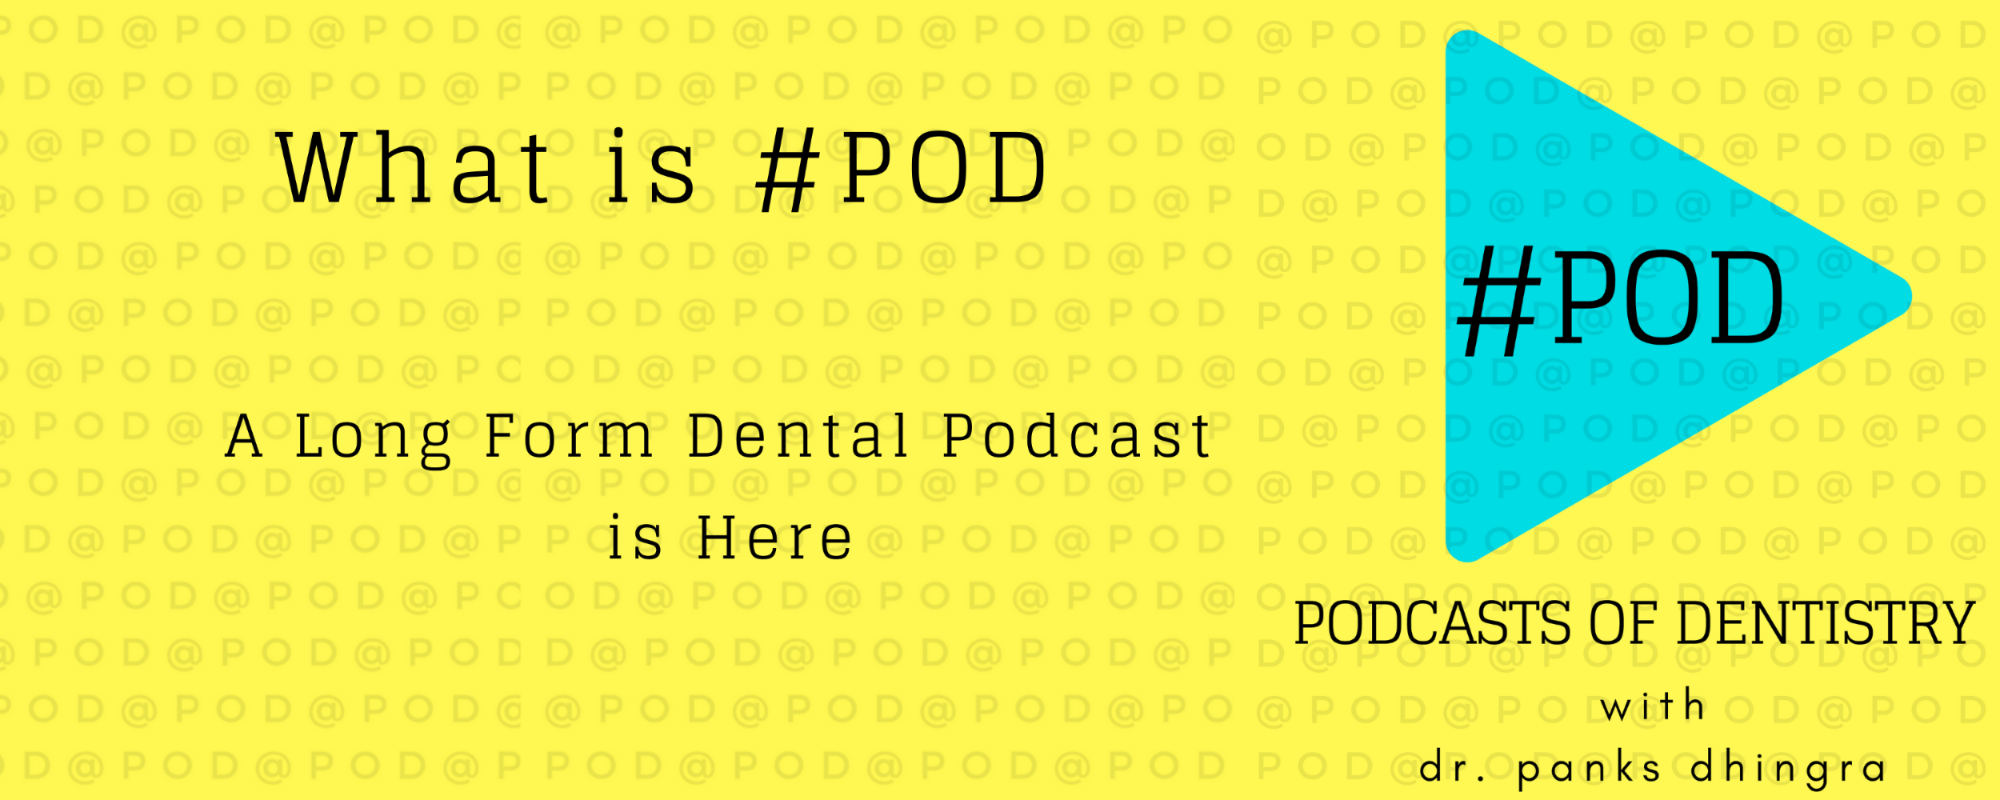 #POD: PODcasts of Dentistry